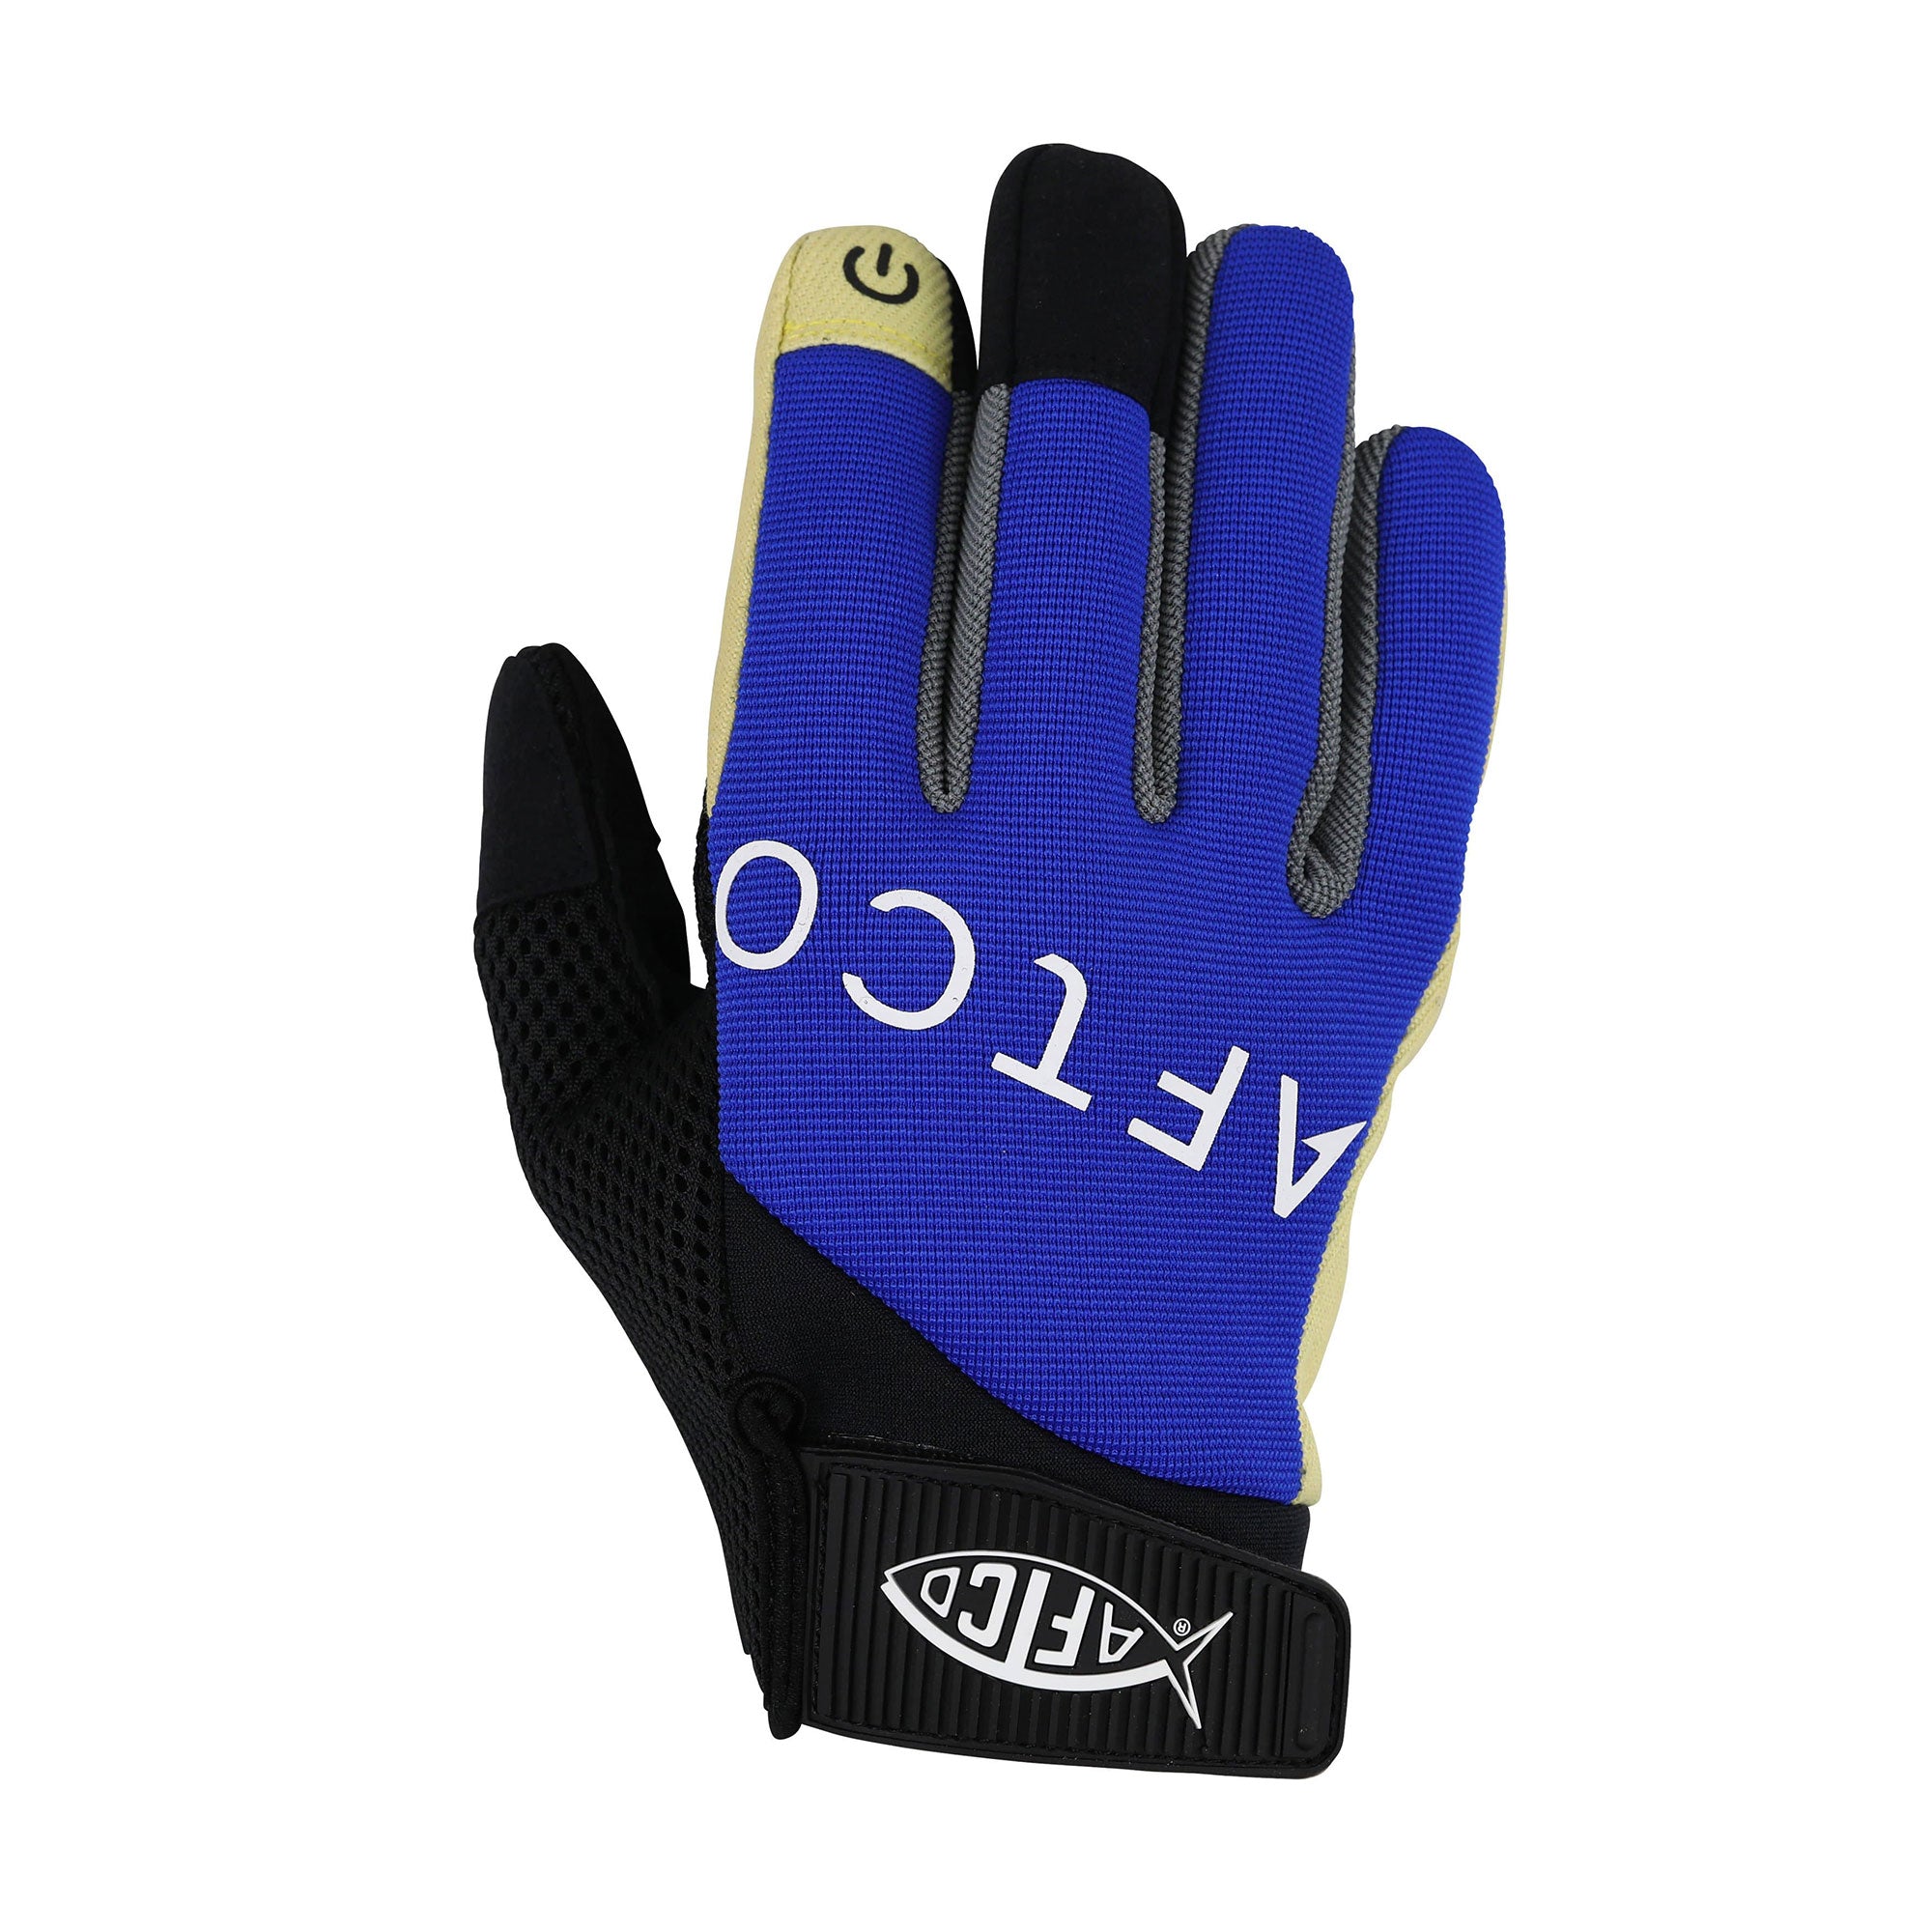 Fishing Gloves Anti Slip Puncture Resistant Fish Landing Glove